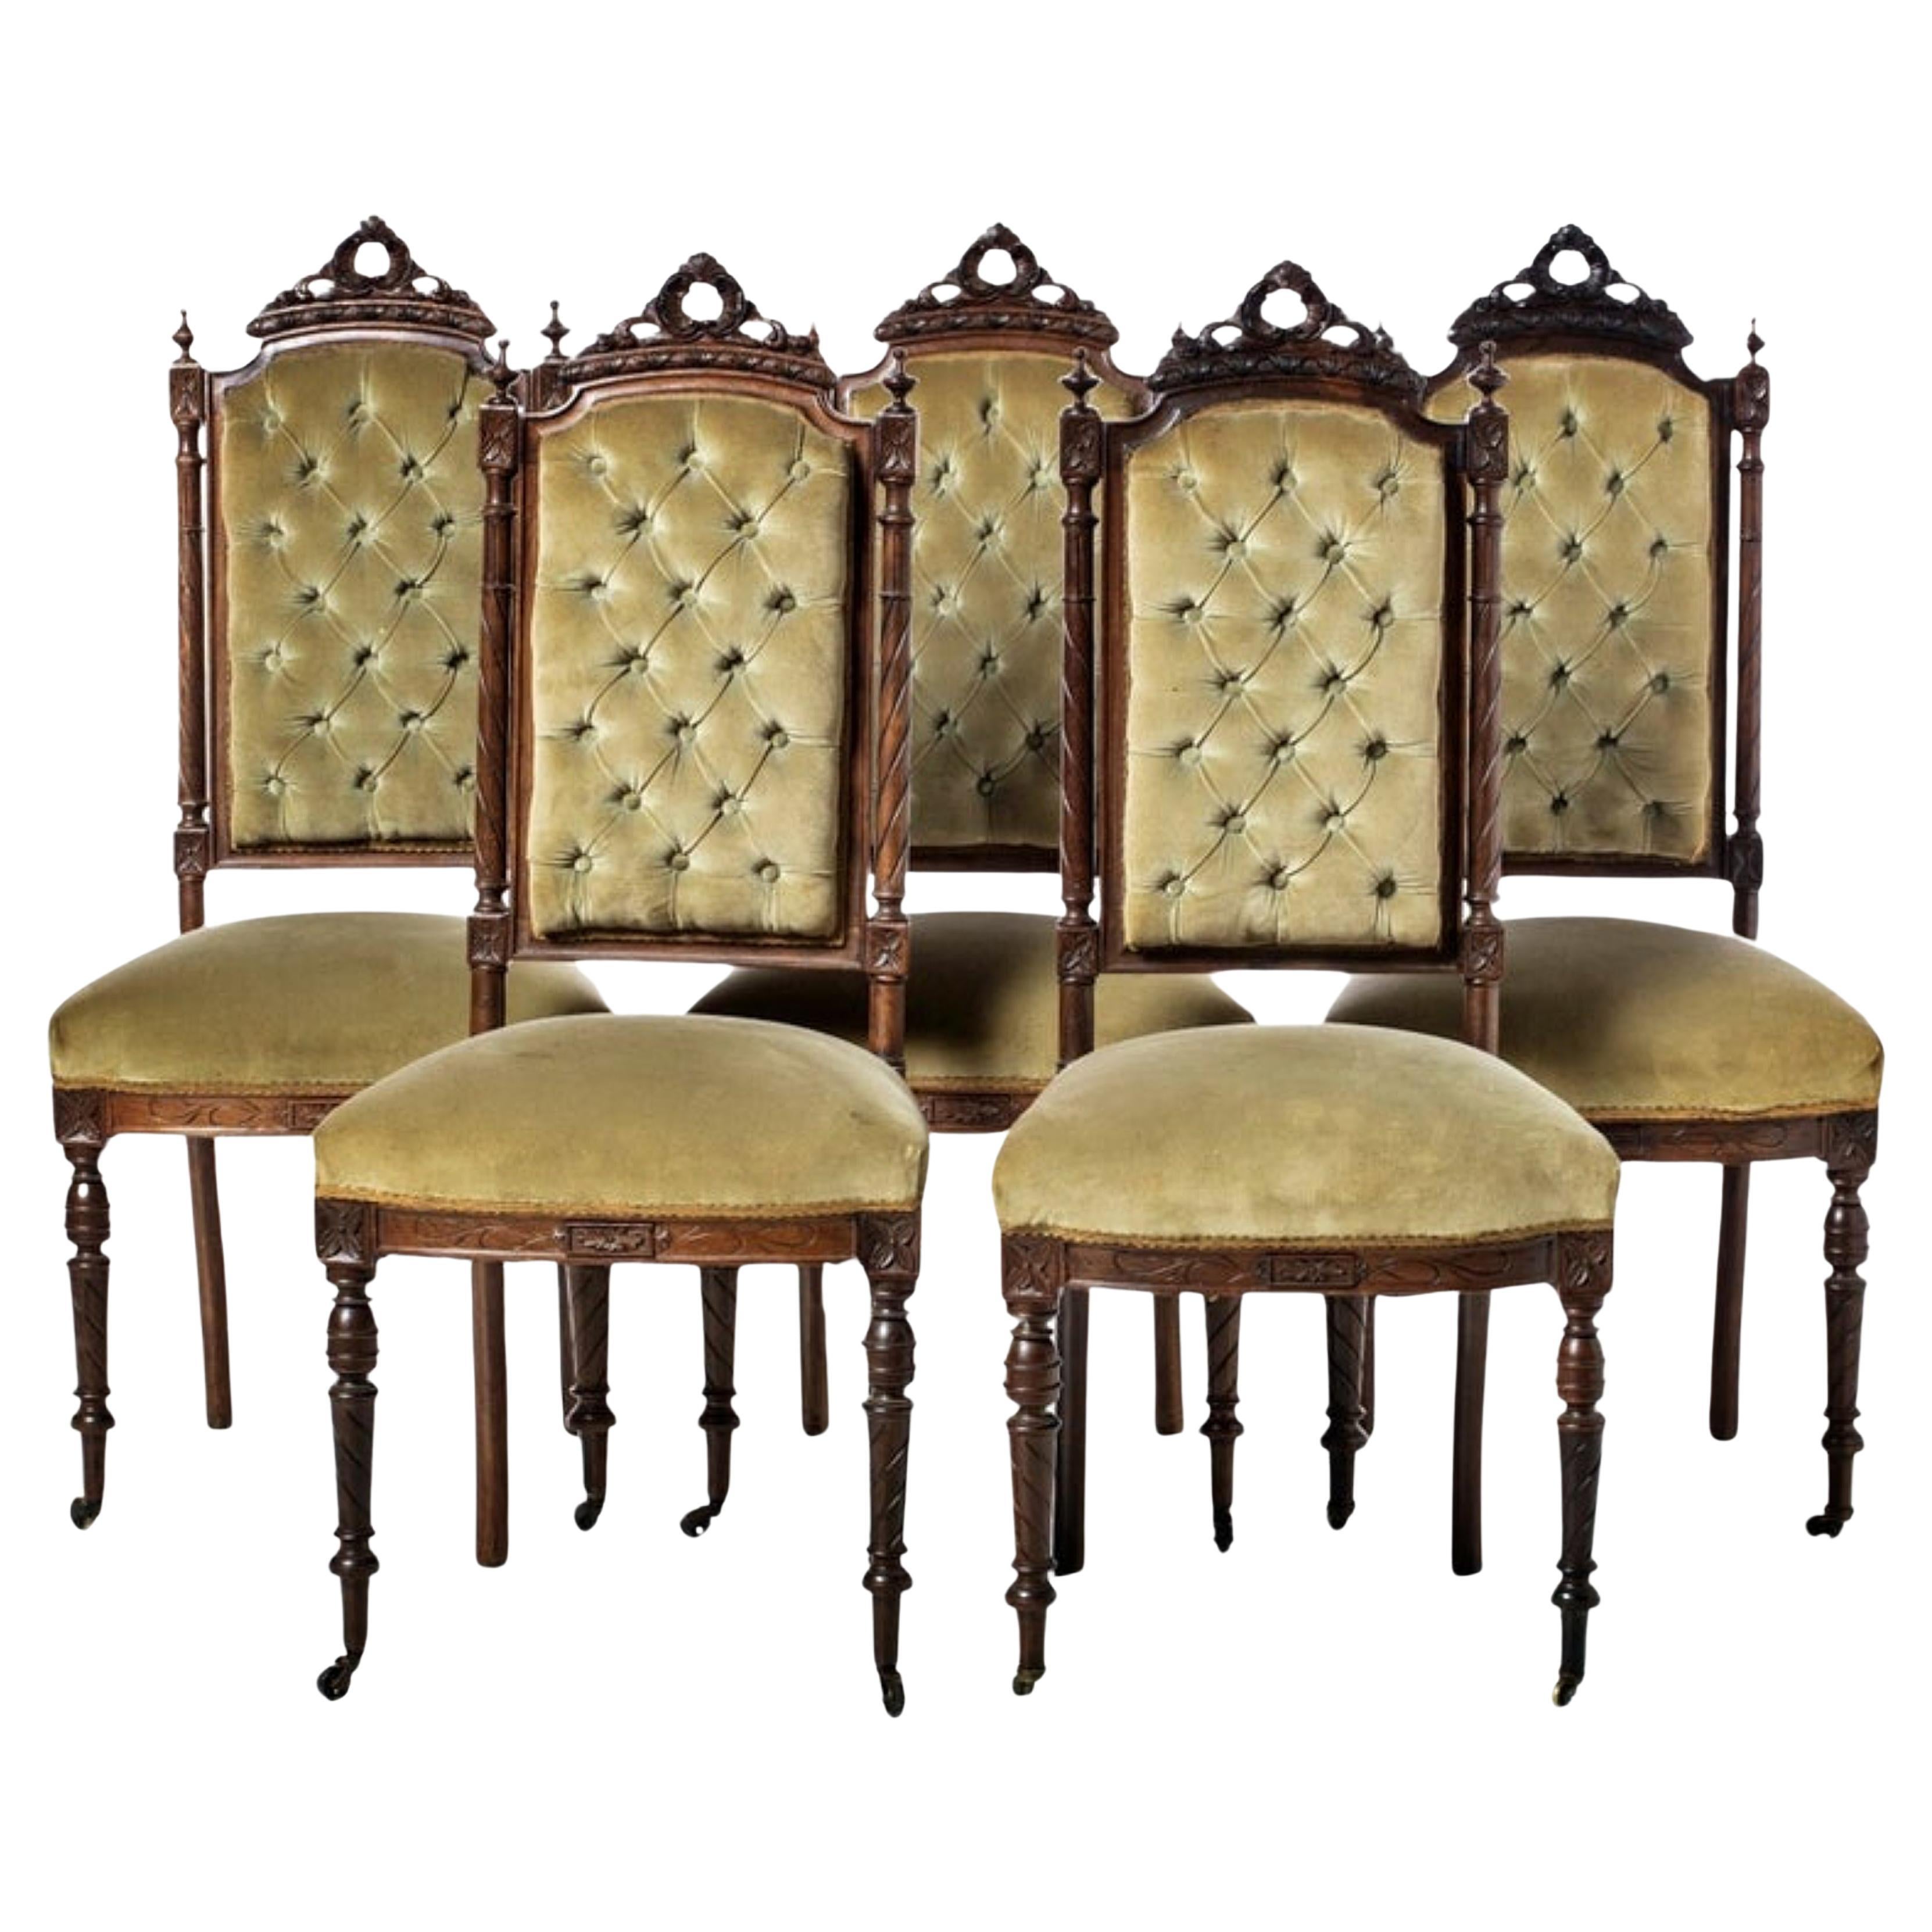 Five Portuguese Romantic Chairs 19th Century For Sale